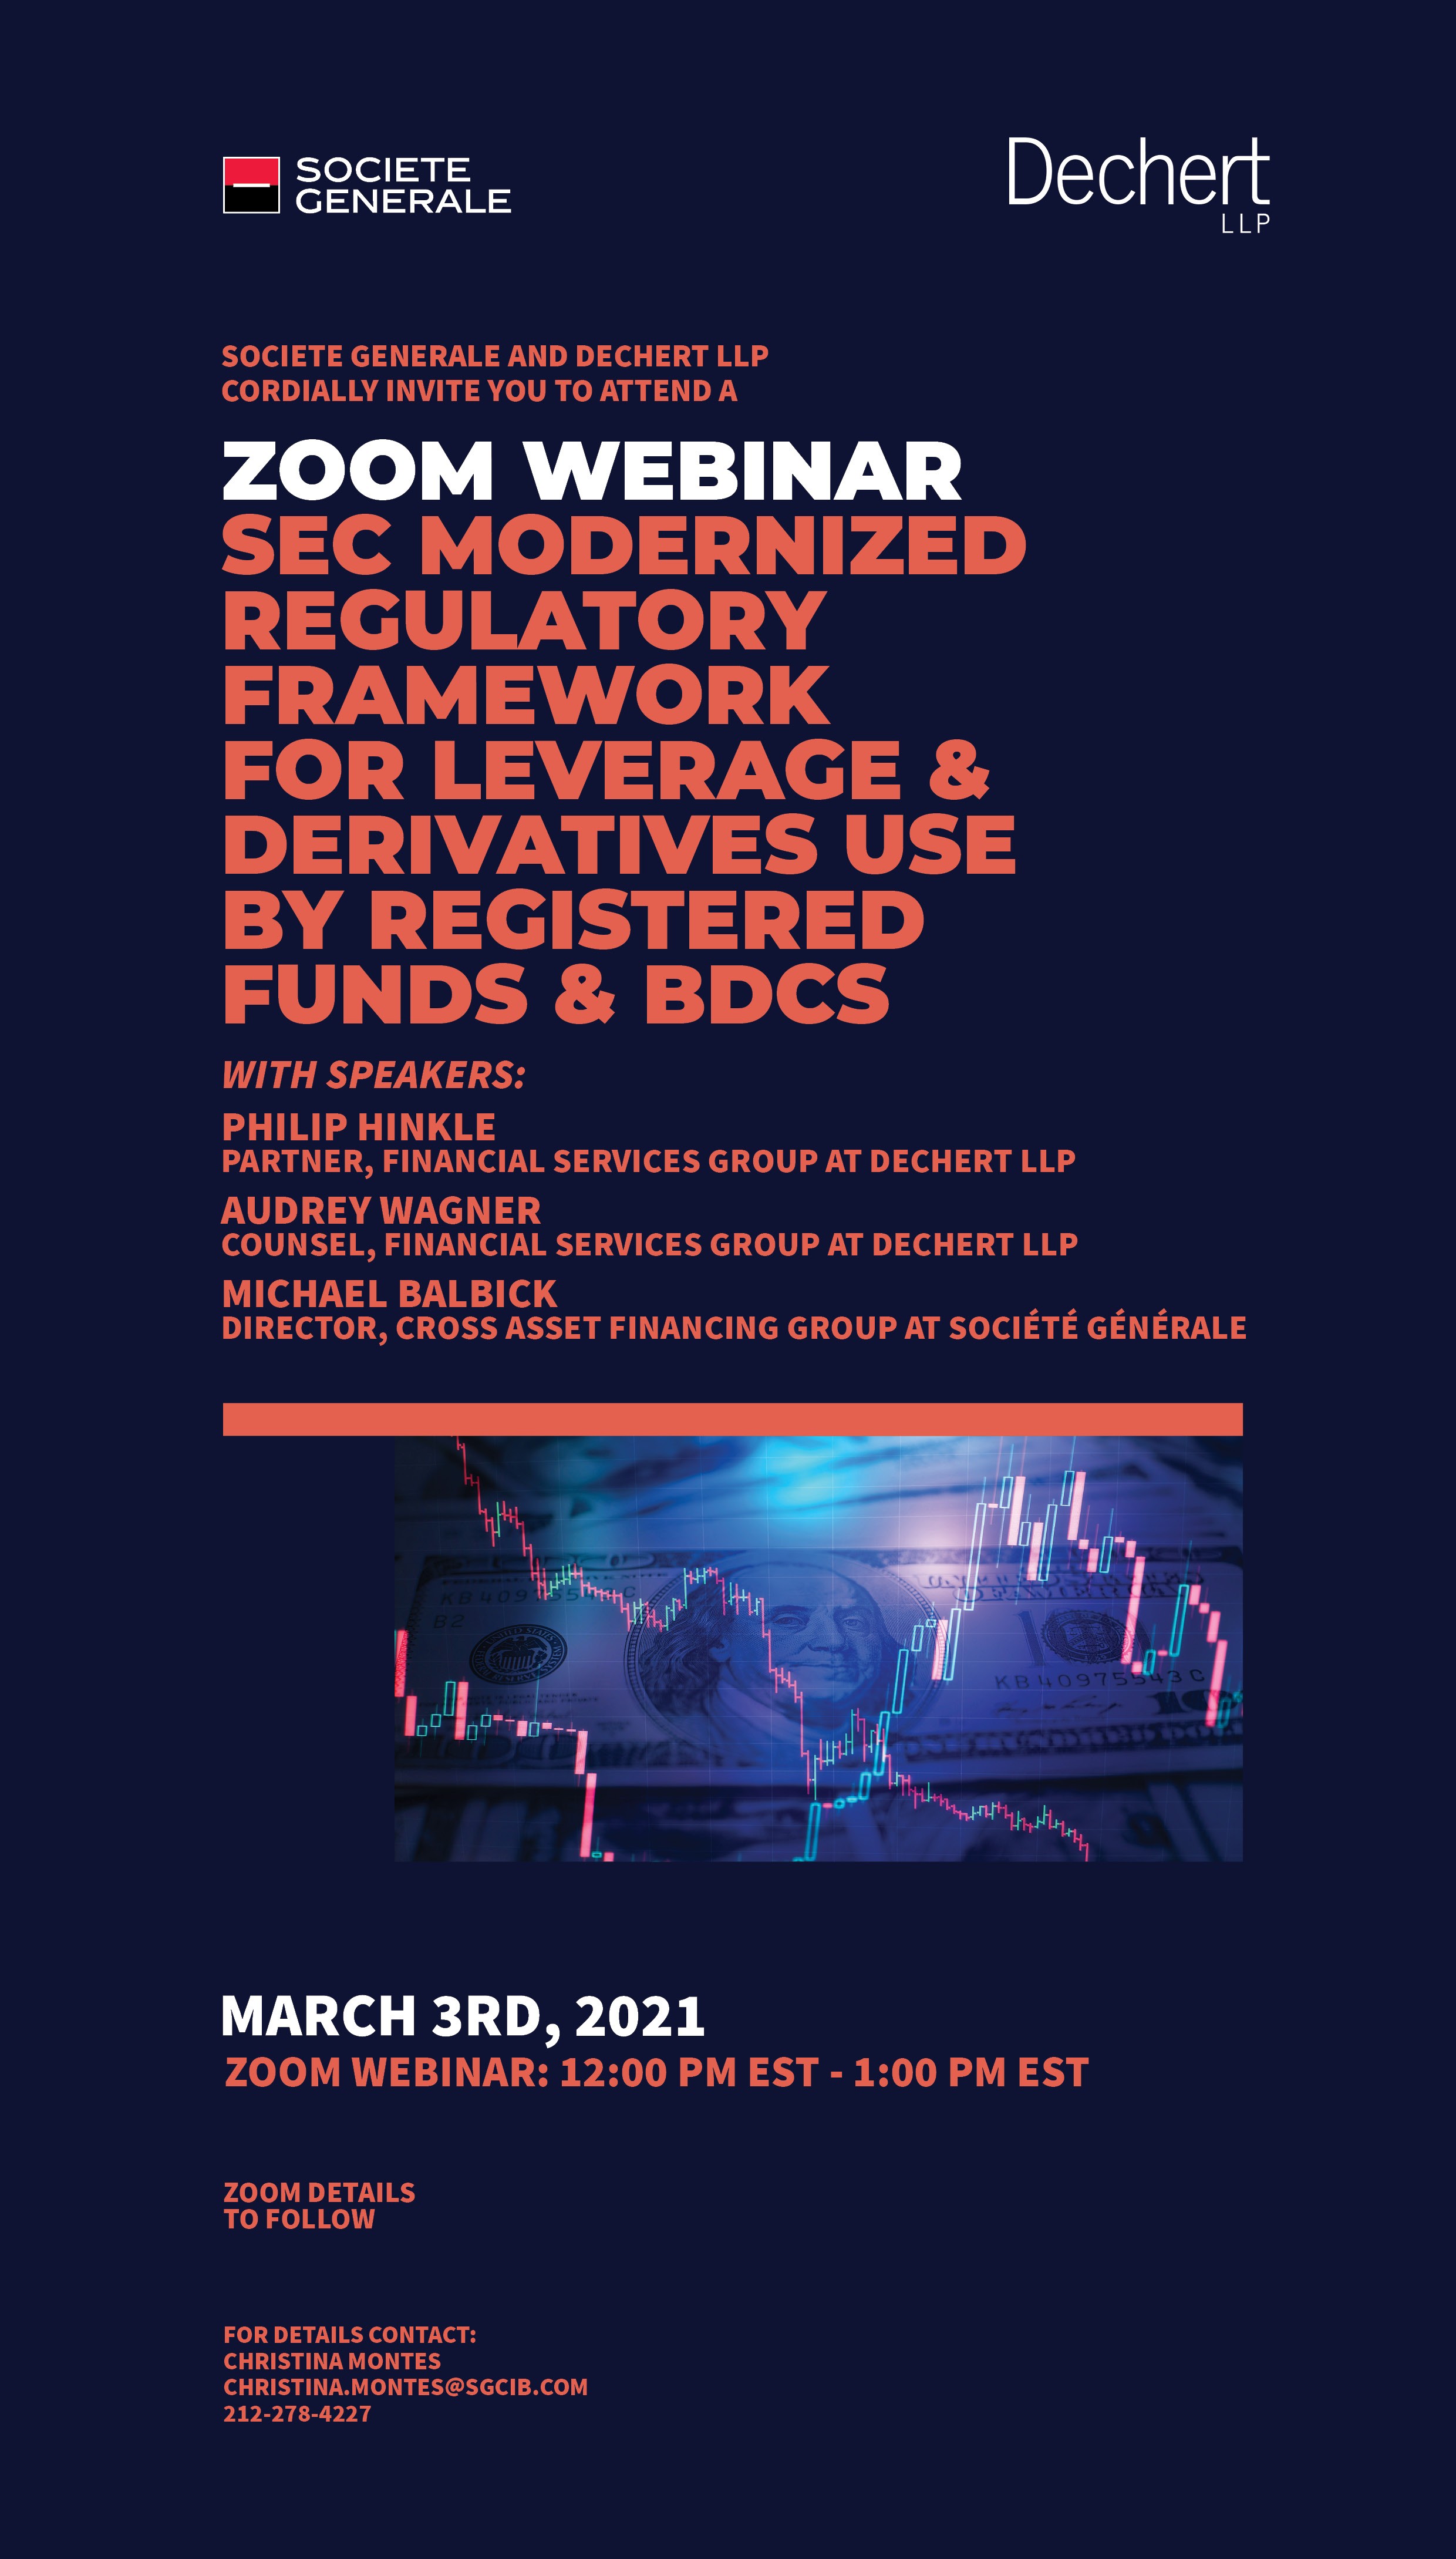 ed-version-sec-modernized-regulatory-framework-for-leverage-derivatives-use-by-registered-funds-bdcs2-ocjkidlq.jpg